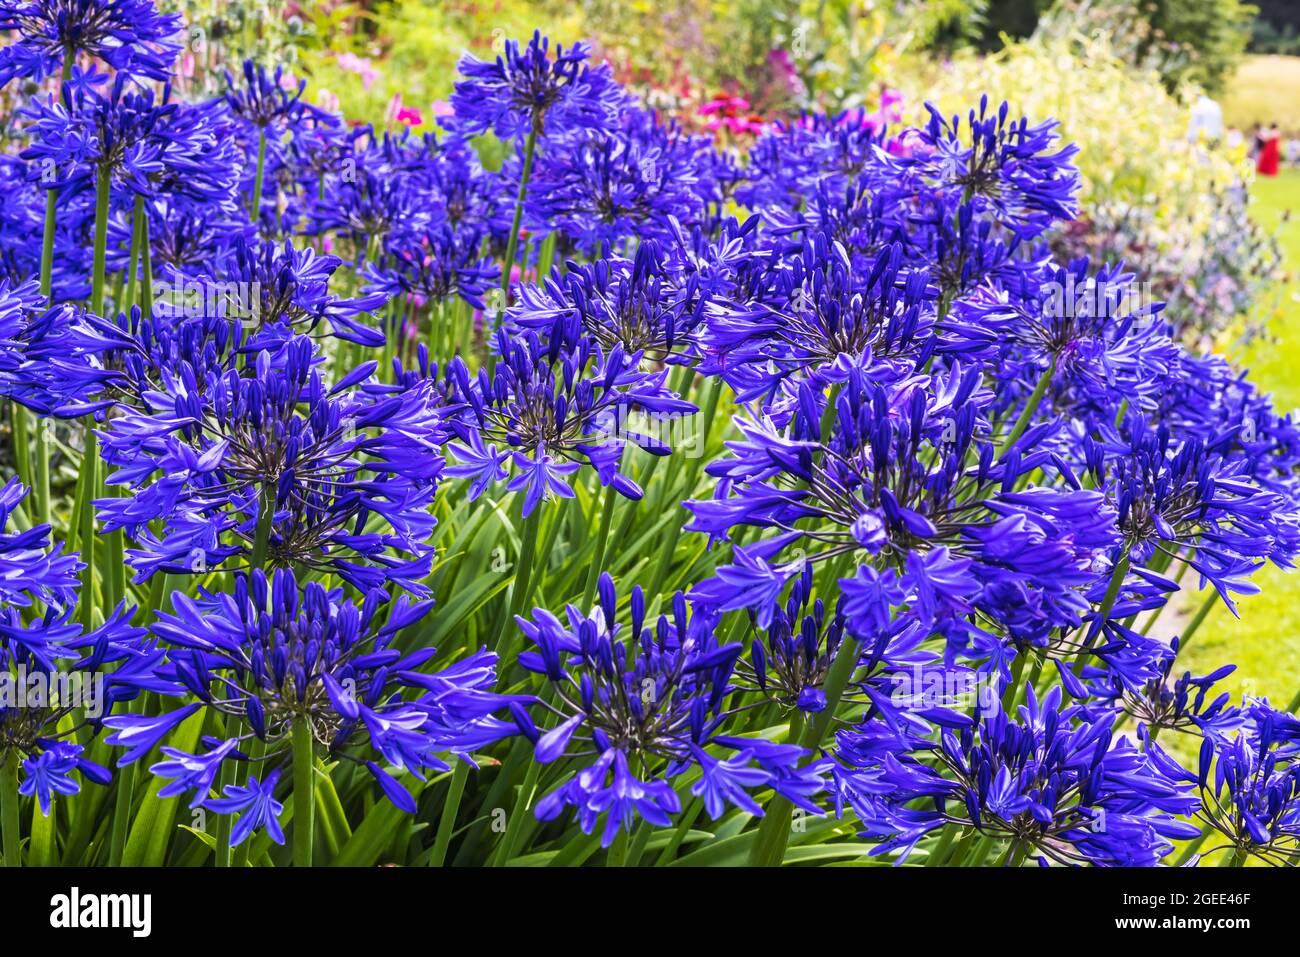 Deep blue Agapanthus flowers in a garden border. Stock Photo